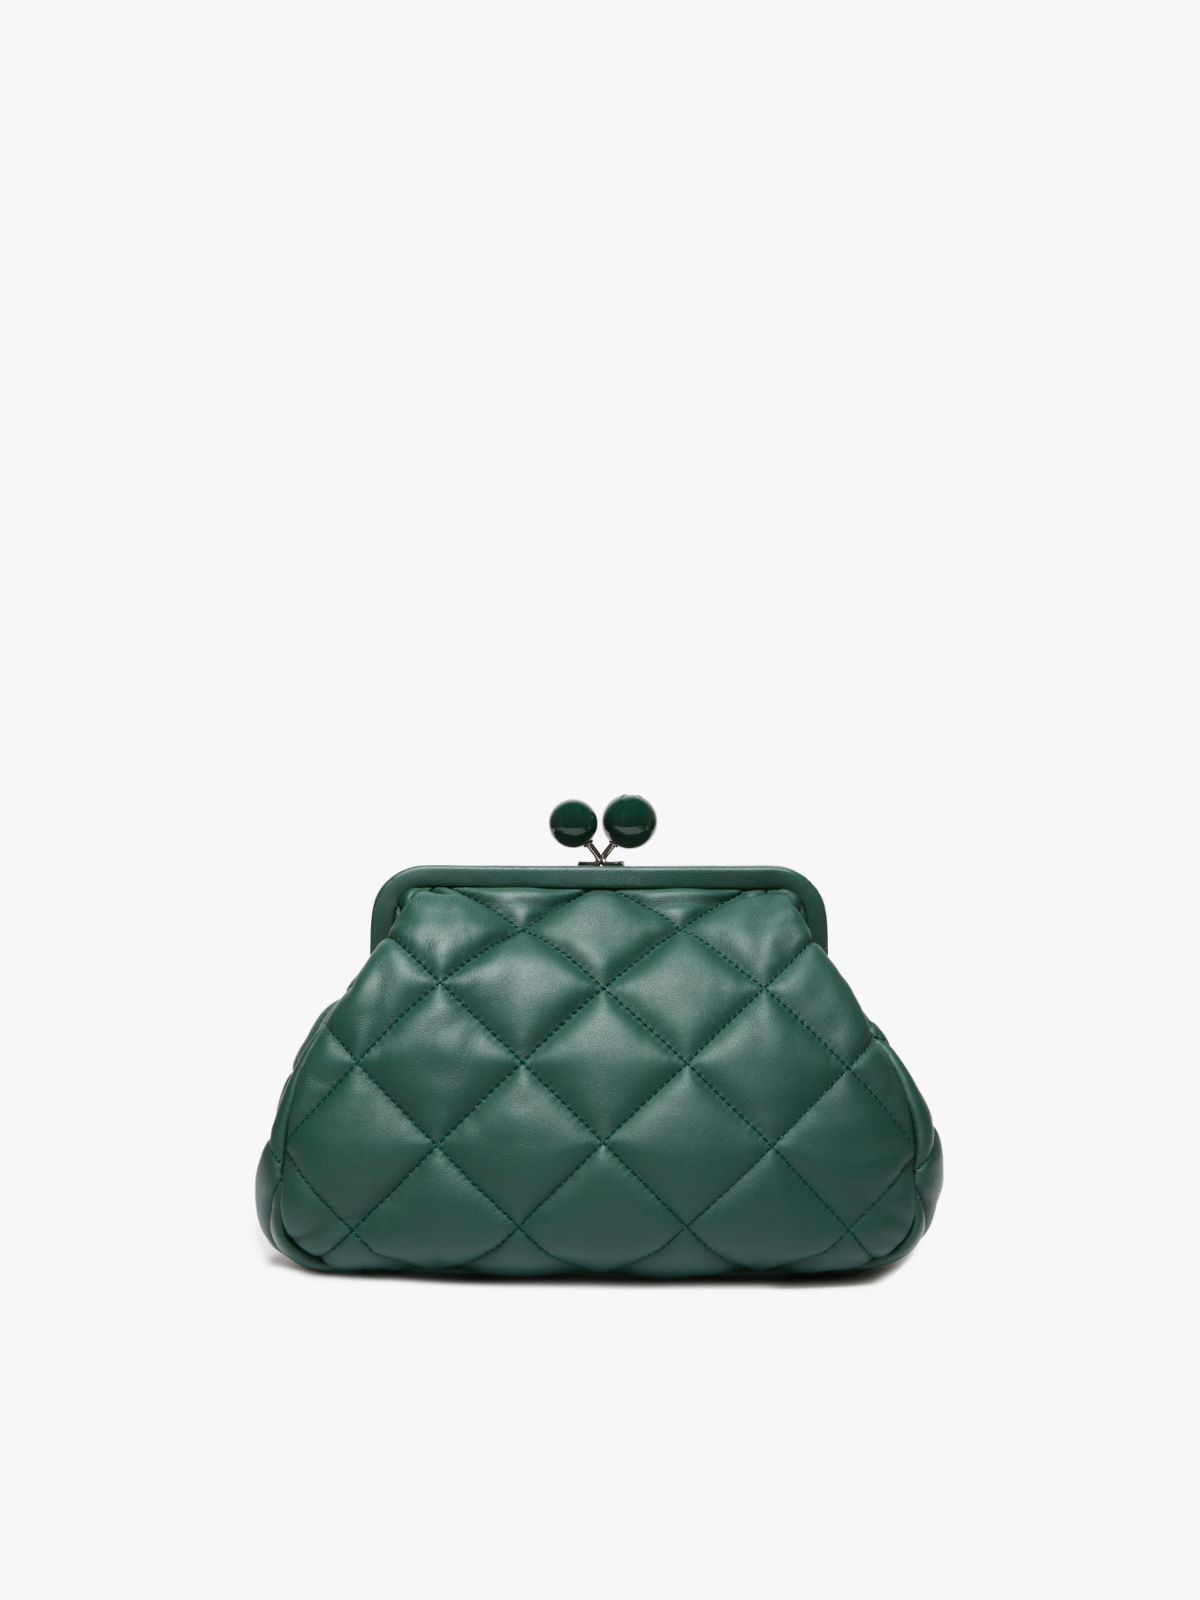 Medium Pasticcino Bag in nappa leather - DARK GREEN - Weekend Max Mara - 3